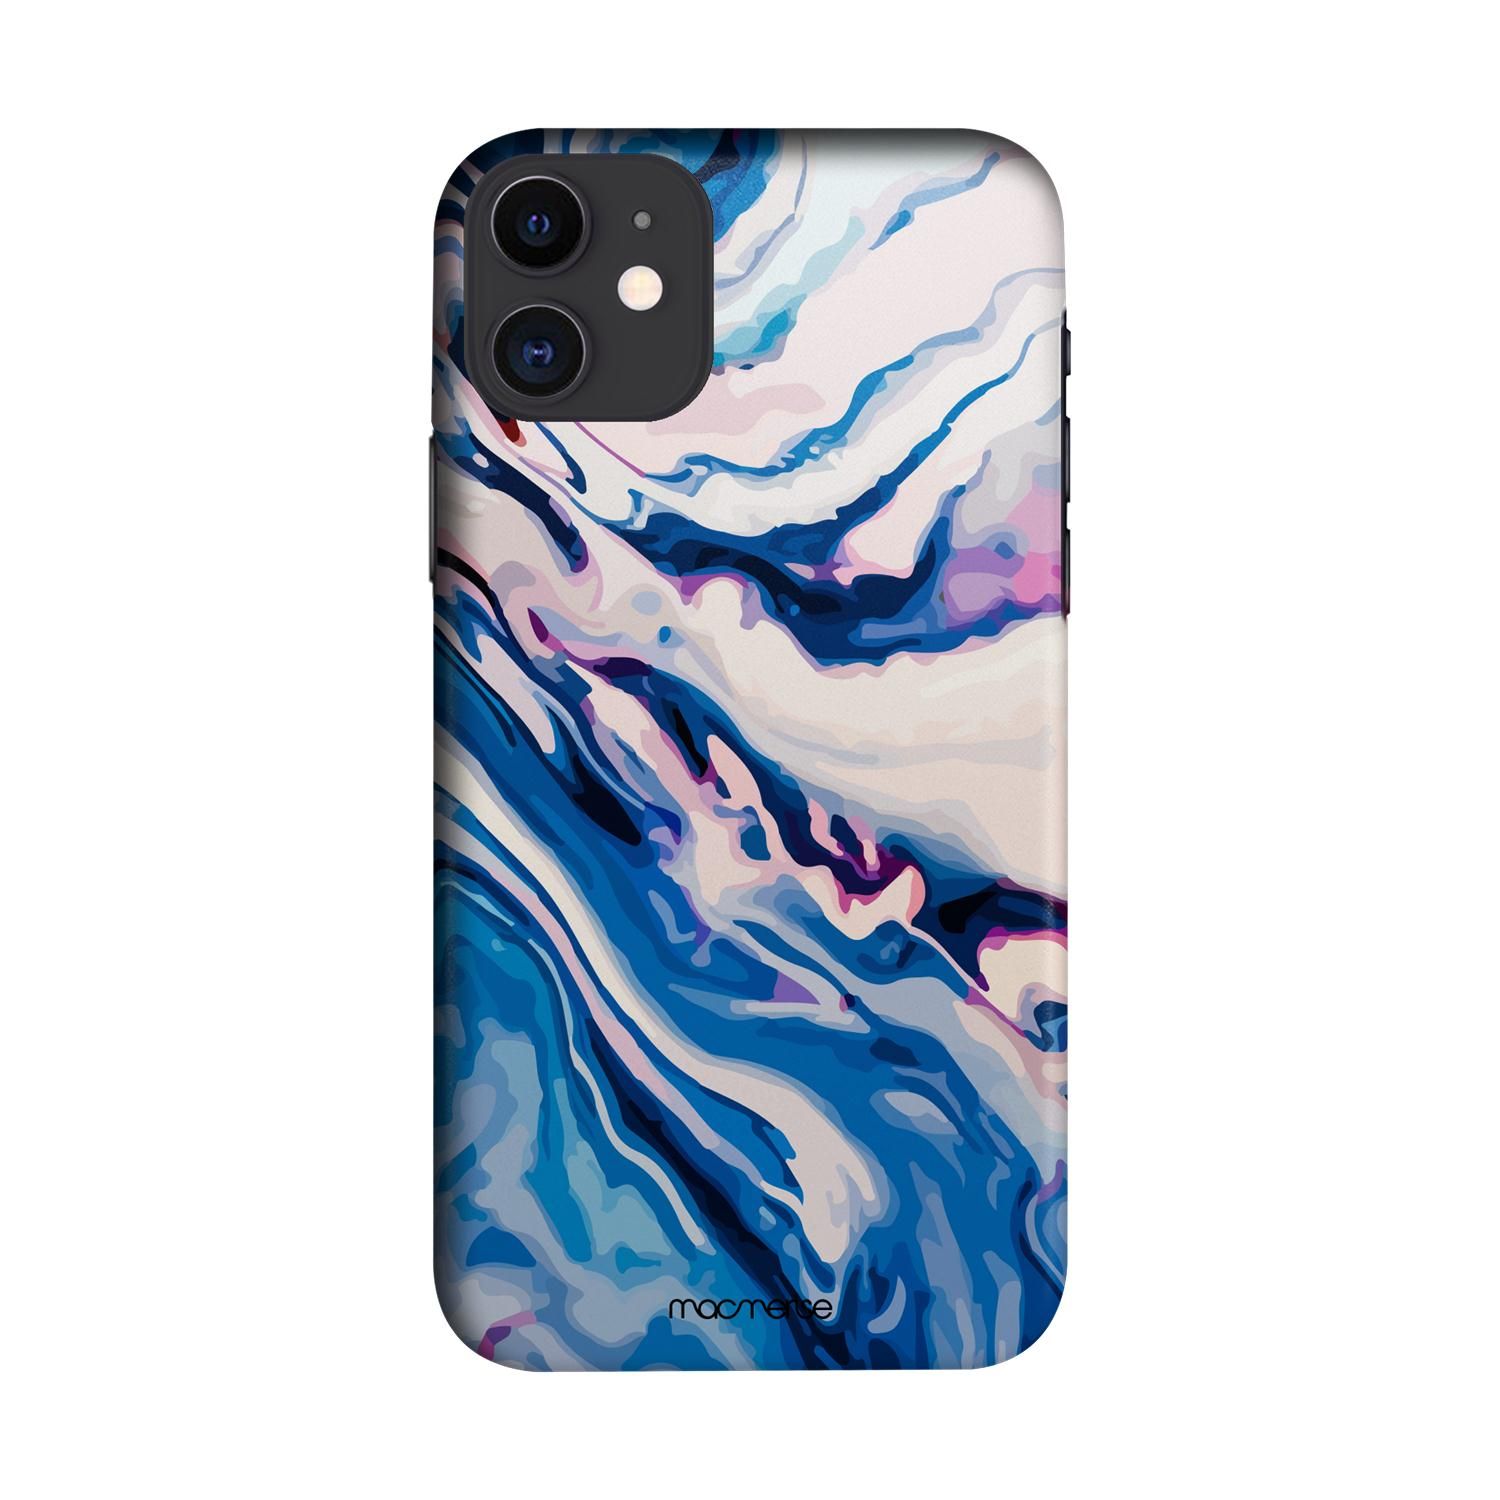 Buy Liquid Funk Pinkblue - Sleek Phone Case for iPhone 11 Online